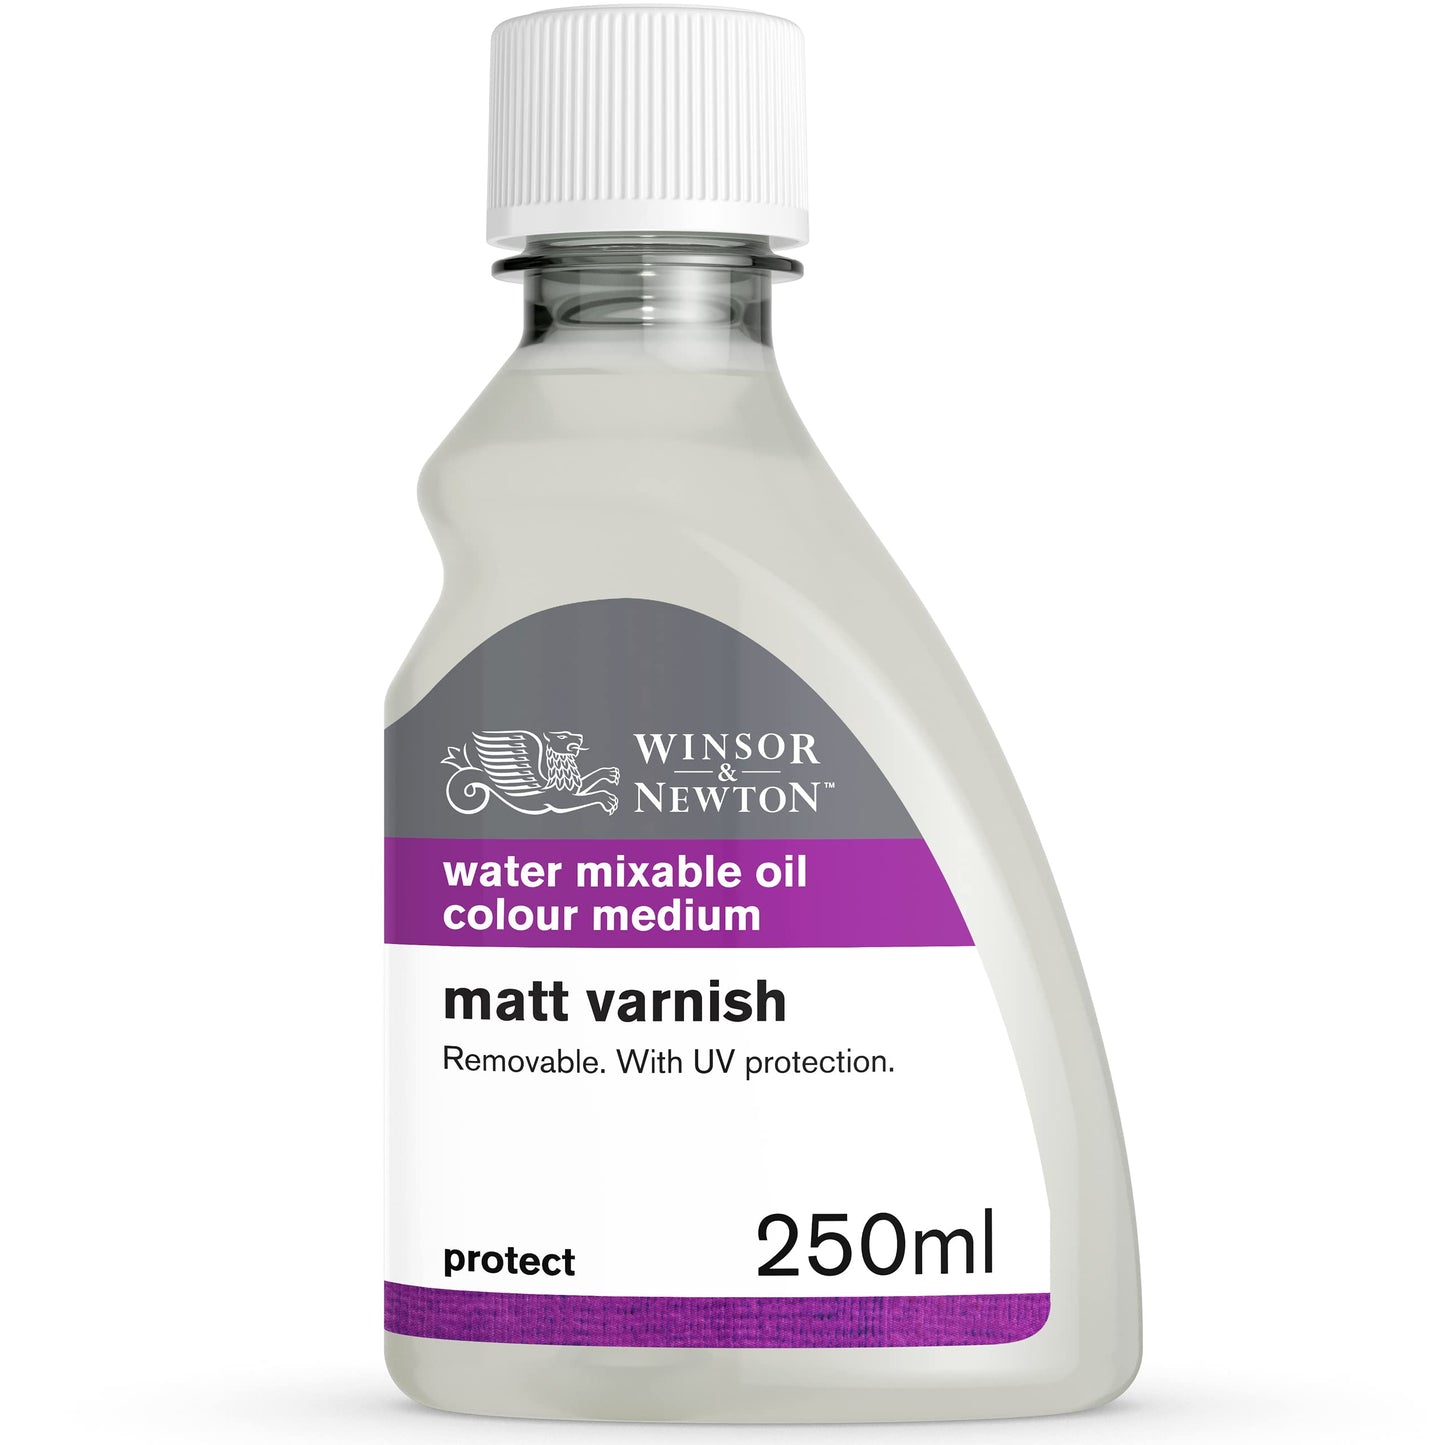 Winsor & Newton Artisan Matt Varnish, 250ml (8.4-oz) bottle